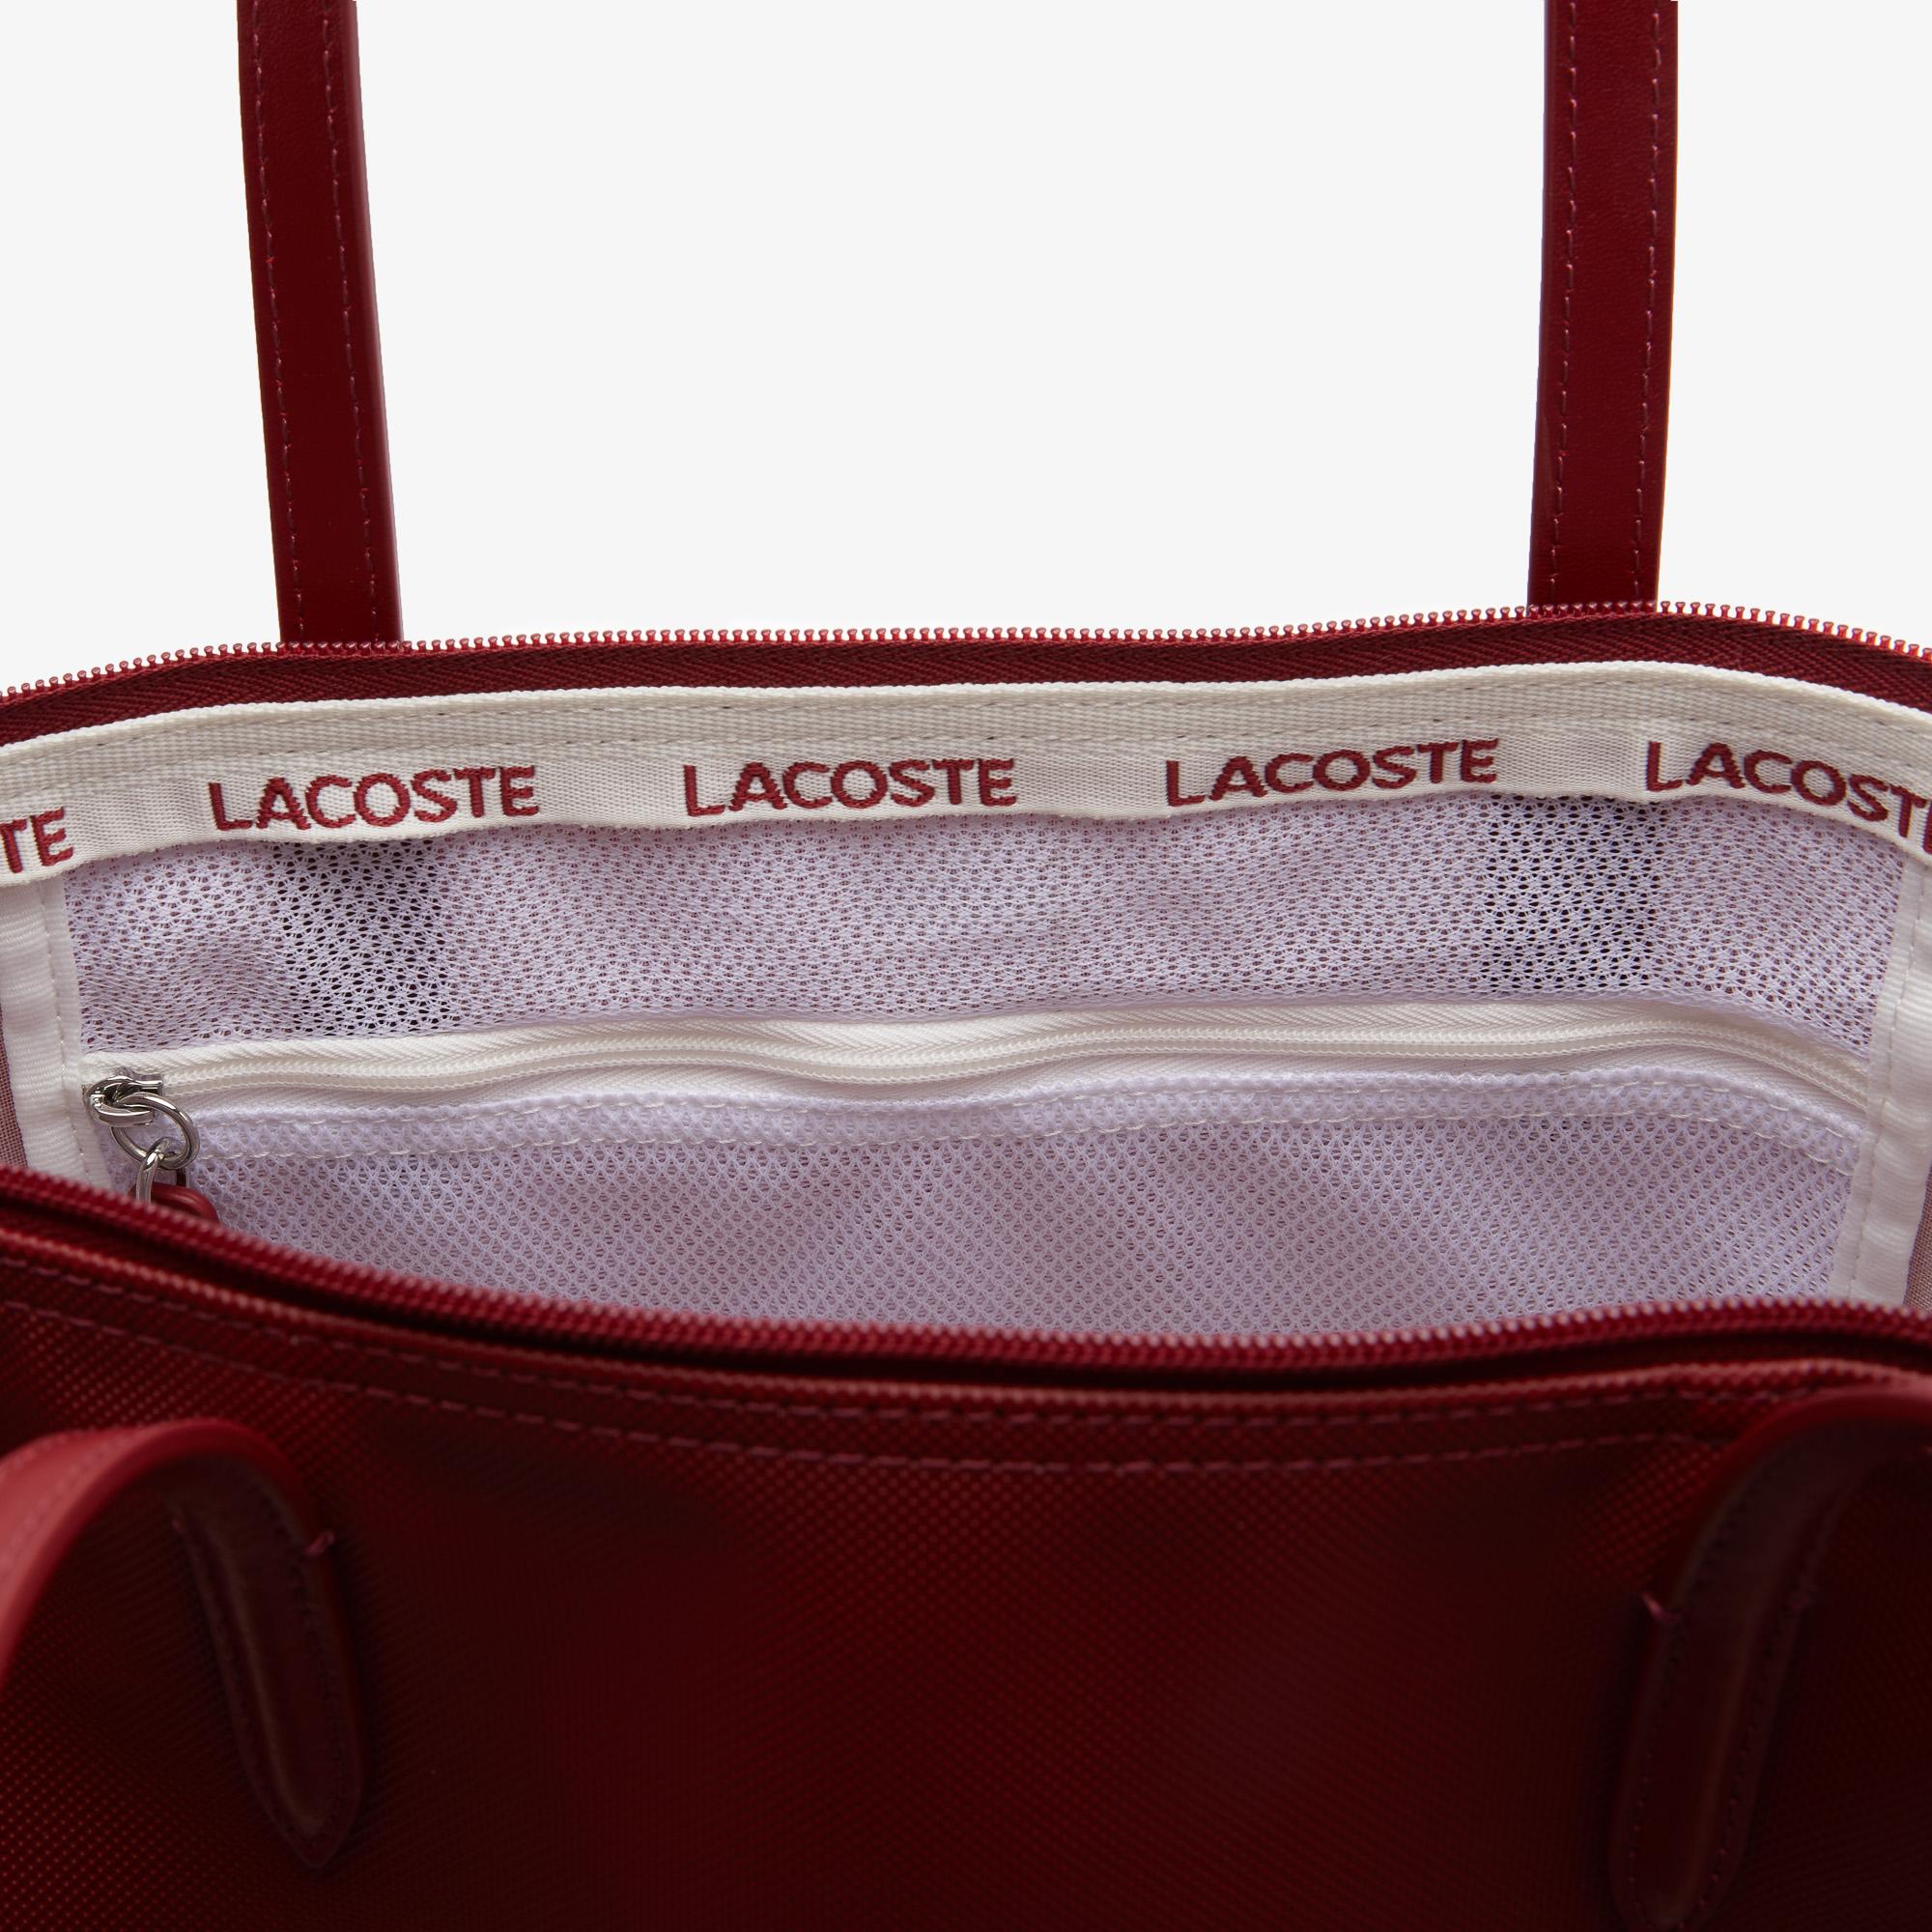 Lacoste damska torebka tote bag zasuwana na zamek błyskawiczny L.12.12 Concept